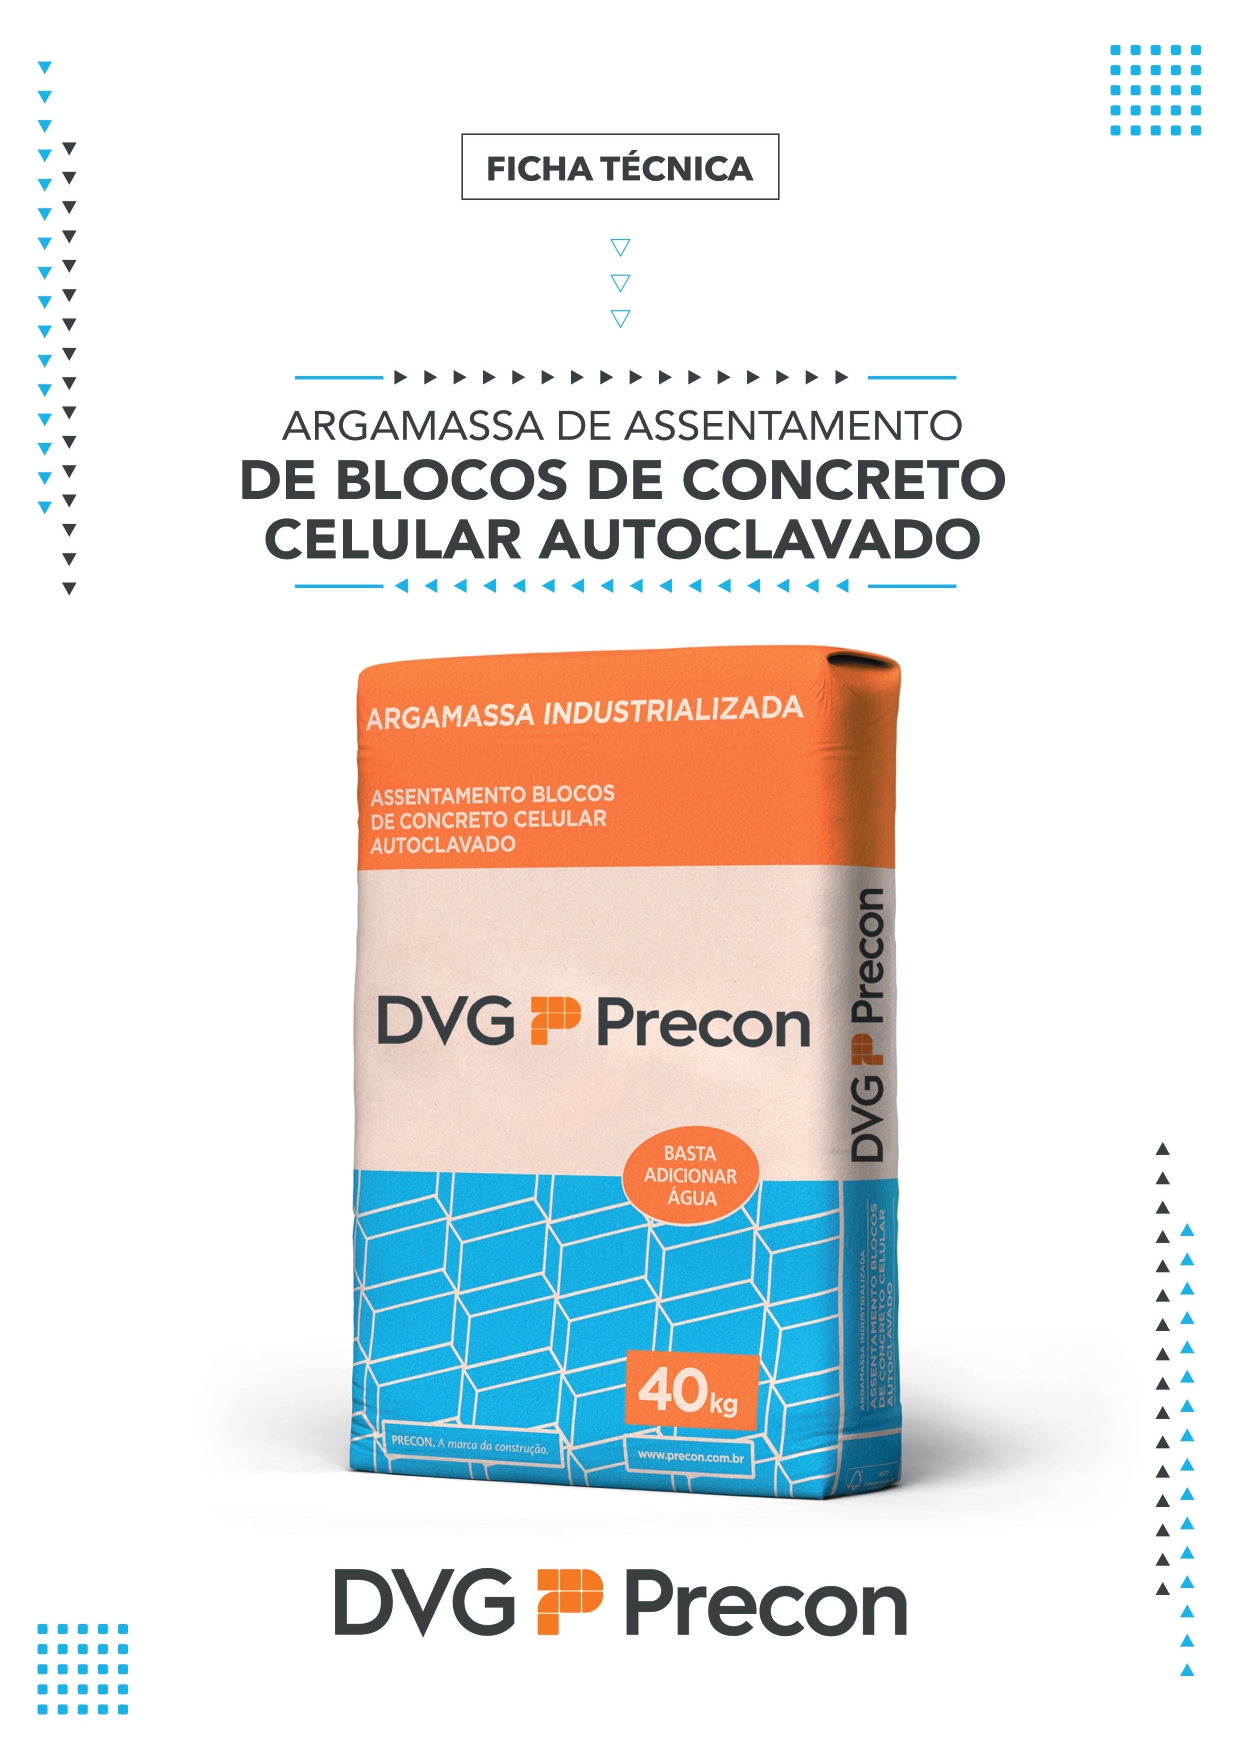 Ficha_Tecnica_de_Blocos_de_Concreto_Celular_Autocravado_page-0001